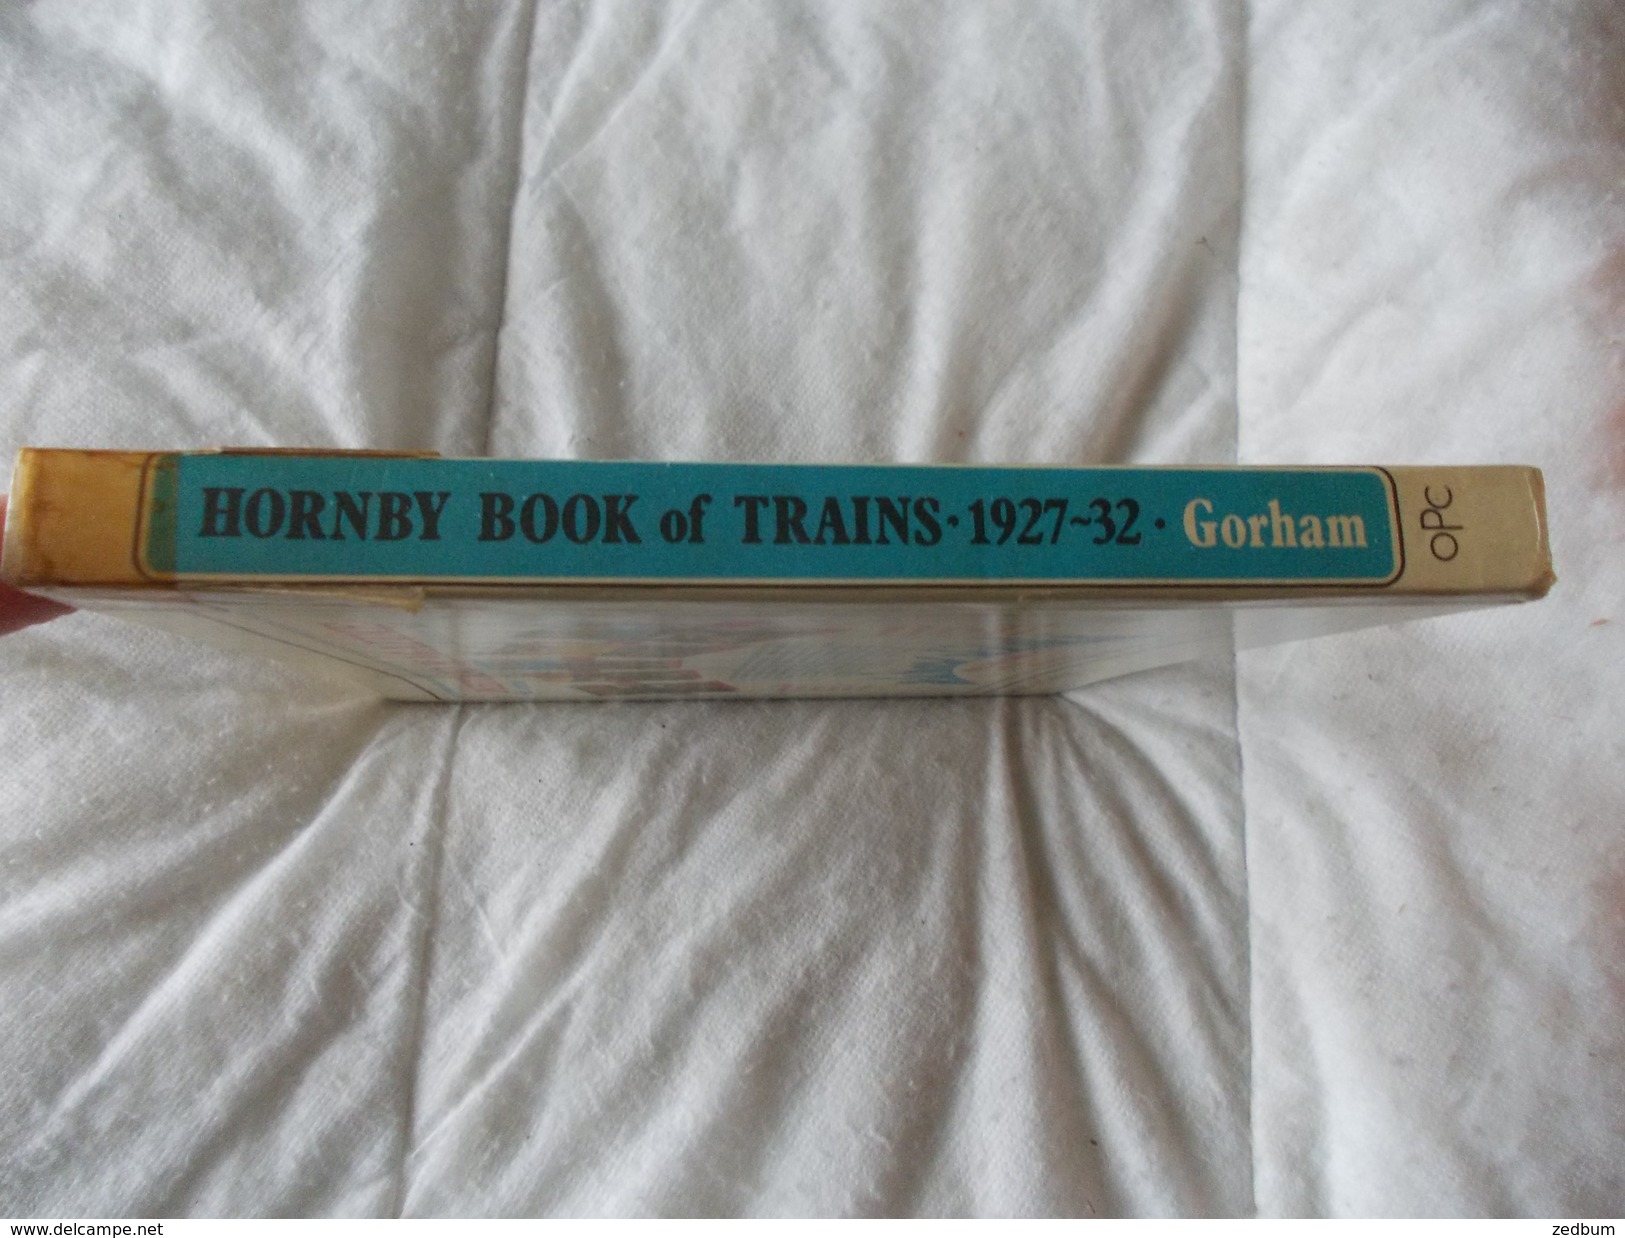 Hornby Book Of Trains A Reprint Of The Catalogue For 1927 1932 - Libros Sobre Colecciones